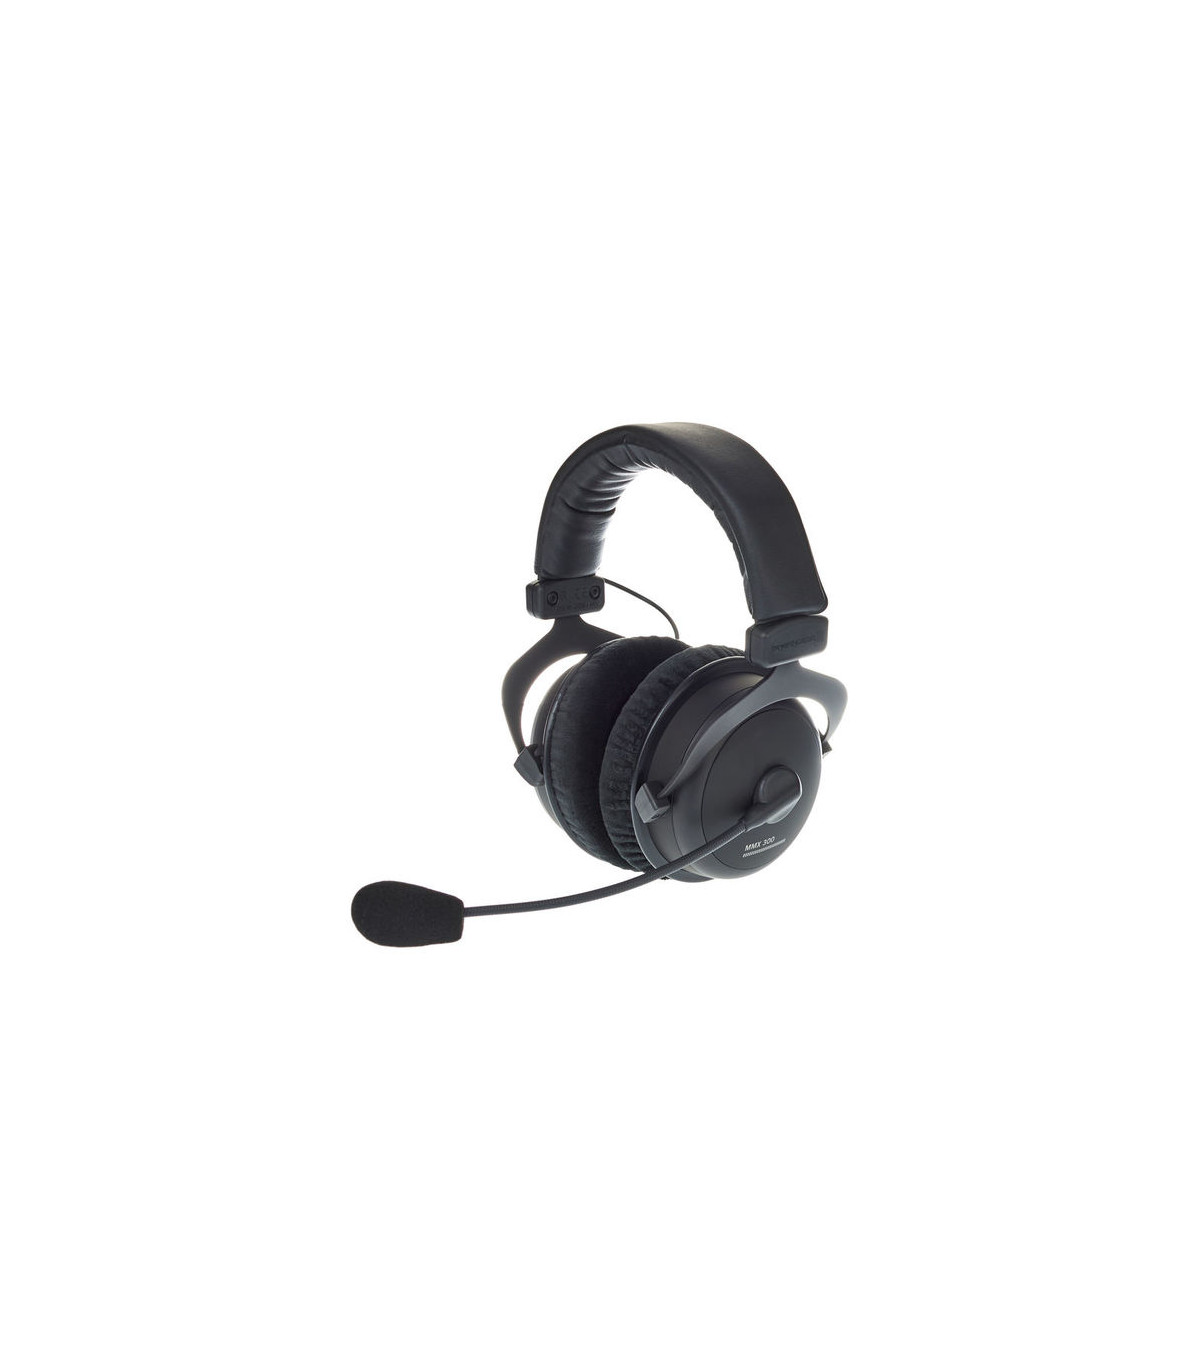 Beyerdynamic MMX 300 Studio Headphones with Boom Microphone -2nd Gen -  Black - 32ohm